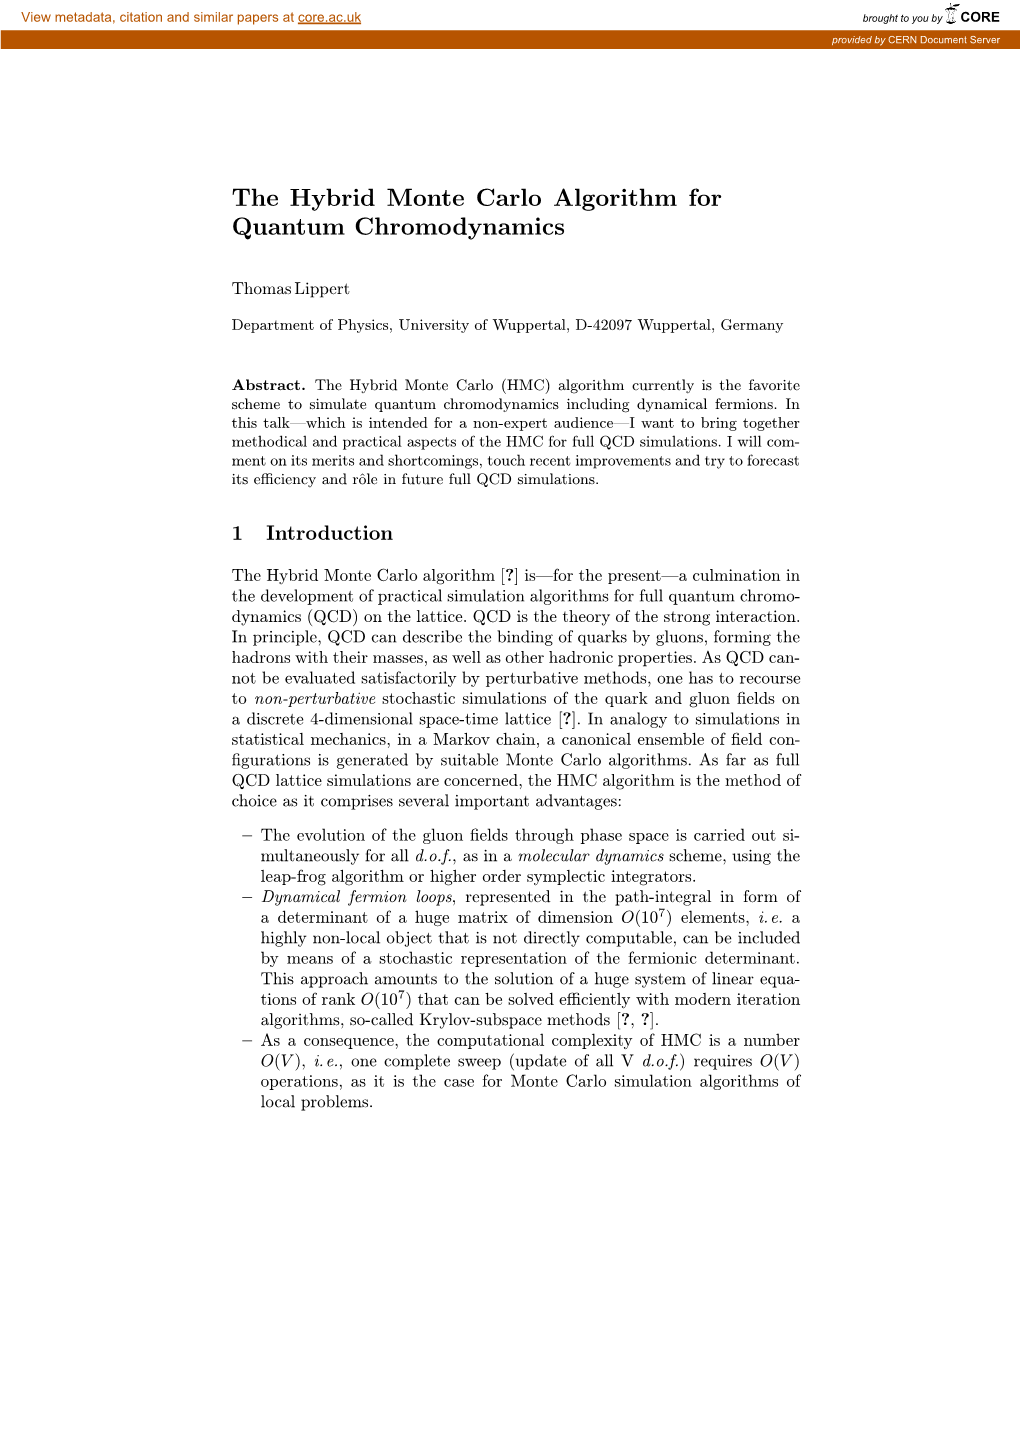 The Hybrid Monte Carlo Algorithm for Quantum Chromodynamics